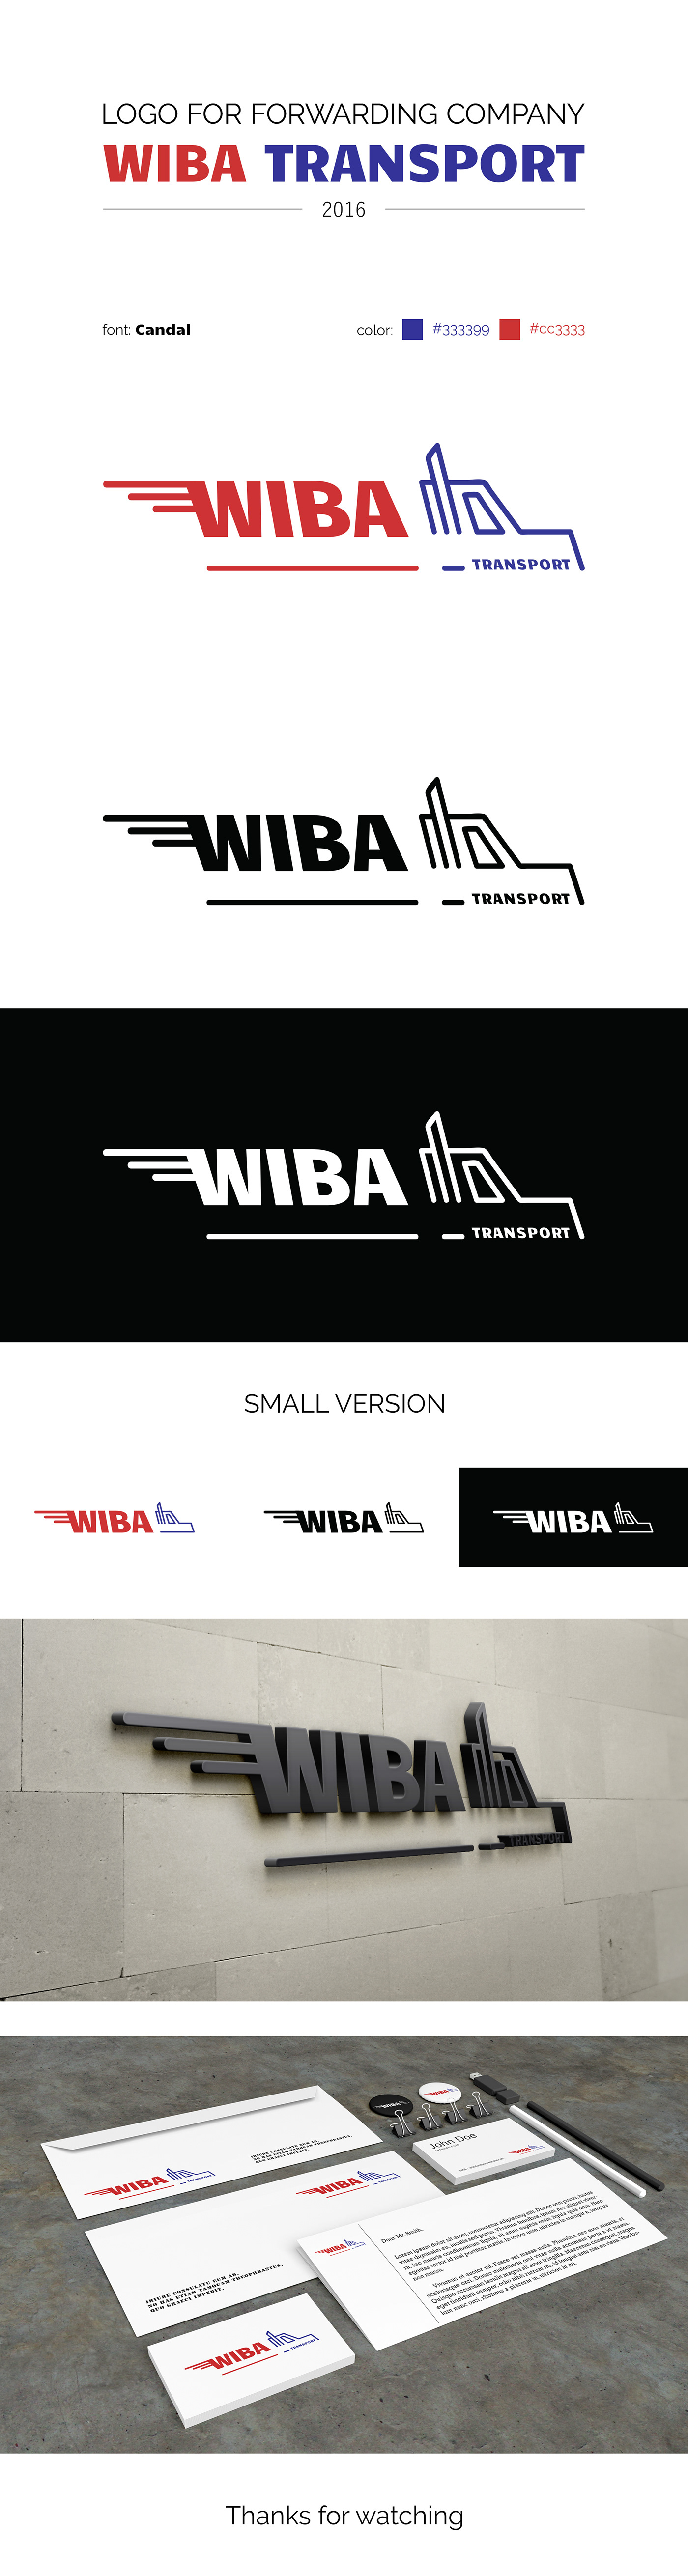 logo WIBA Transport forwarding shipping logistic Mockup company branding 